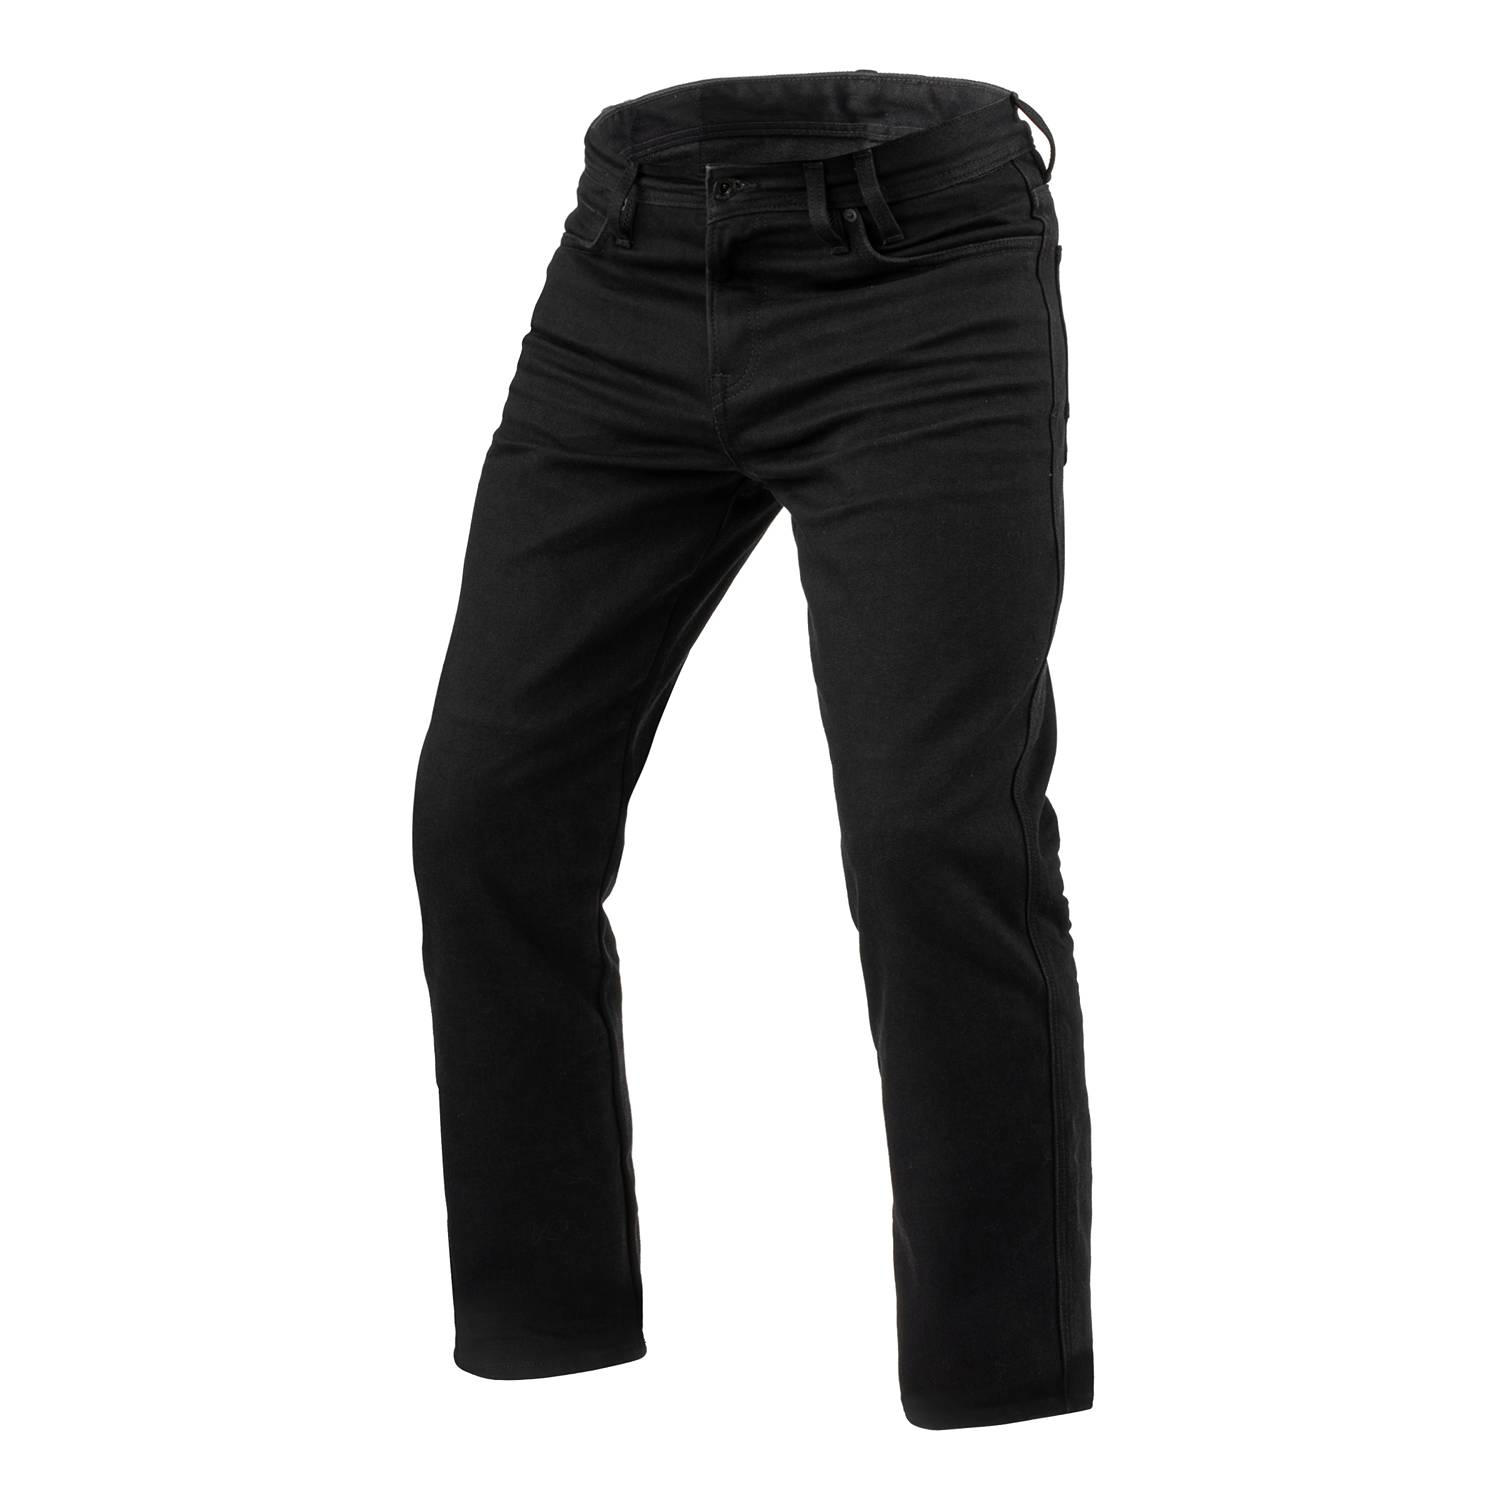 Image of REV'IT! Jeans Lombard 3 RF Black L36 Motorcycle Jeans Talla L36/W31